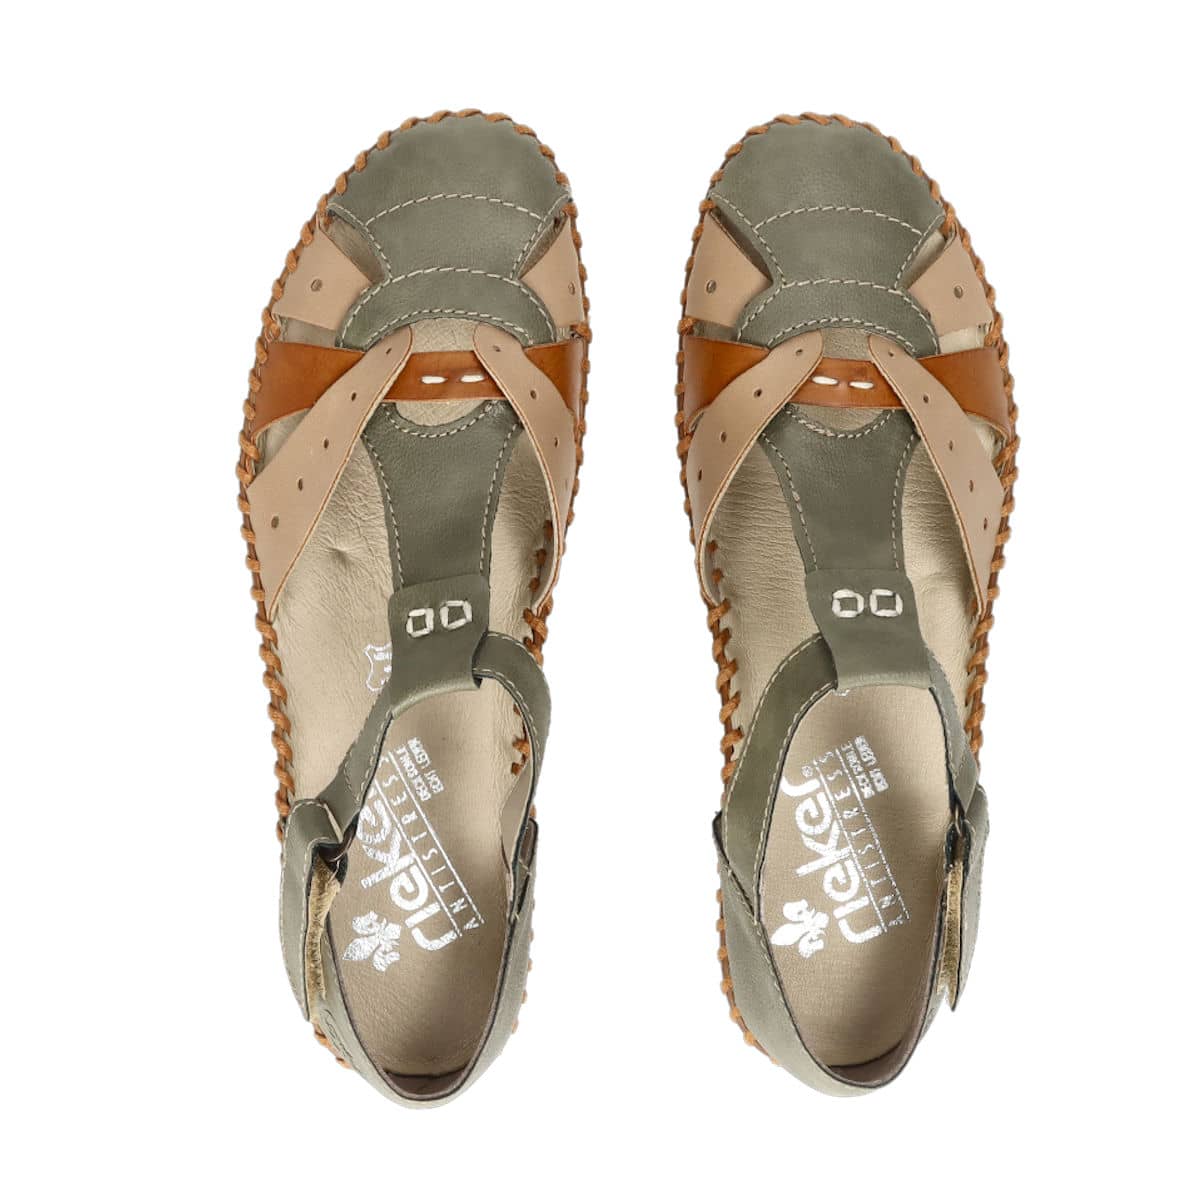 Rieker women's comfortable sandals - olive Robel.shoes